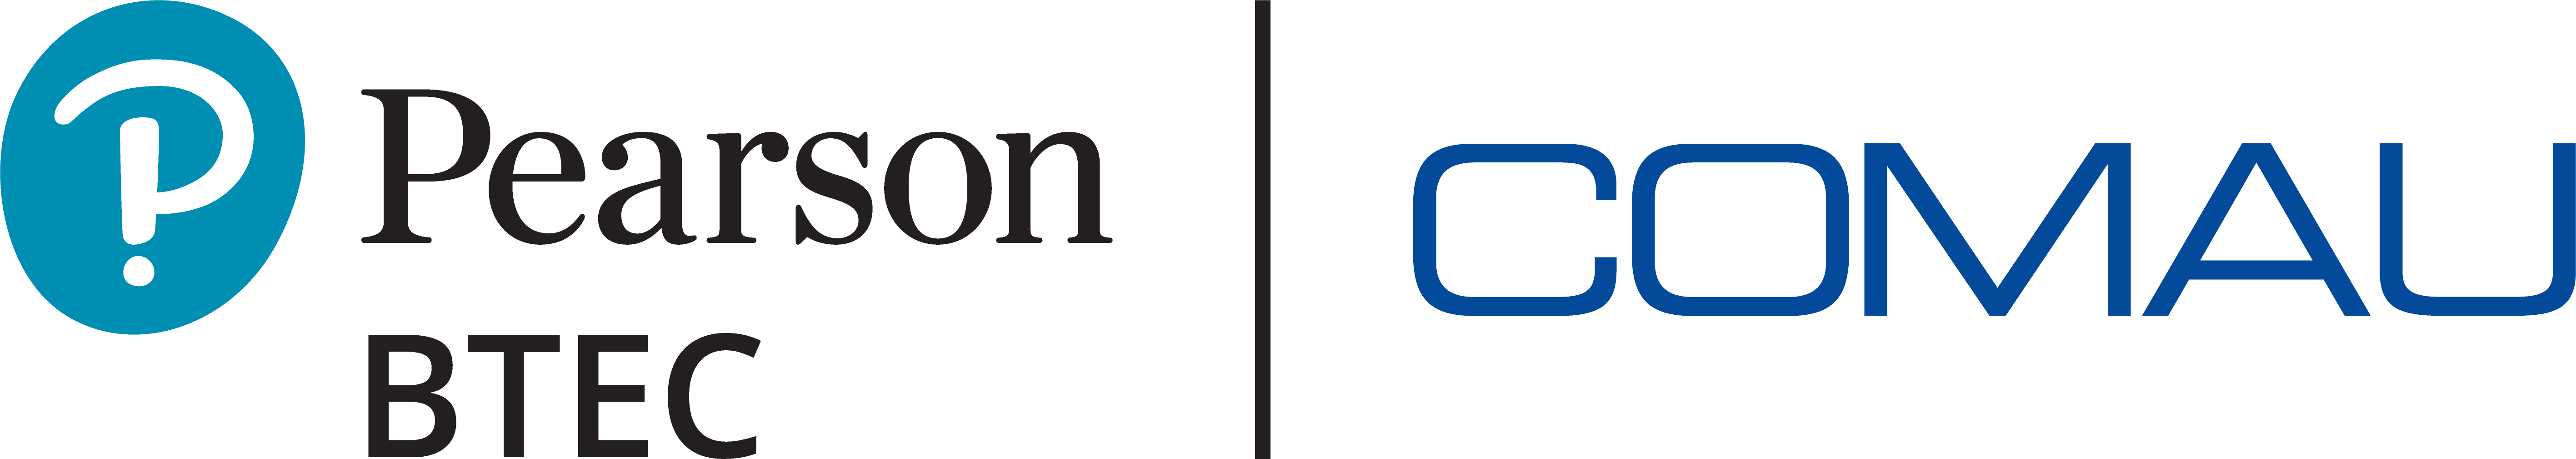 Pearson and Comau partnership logo